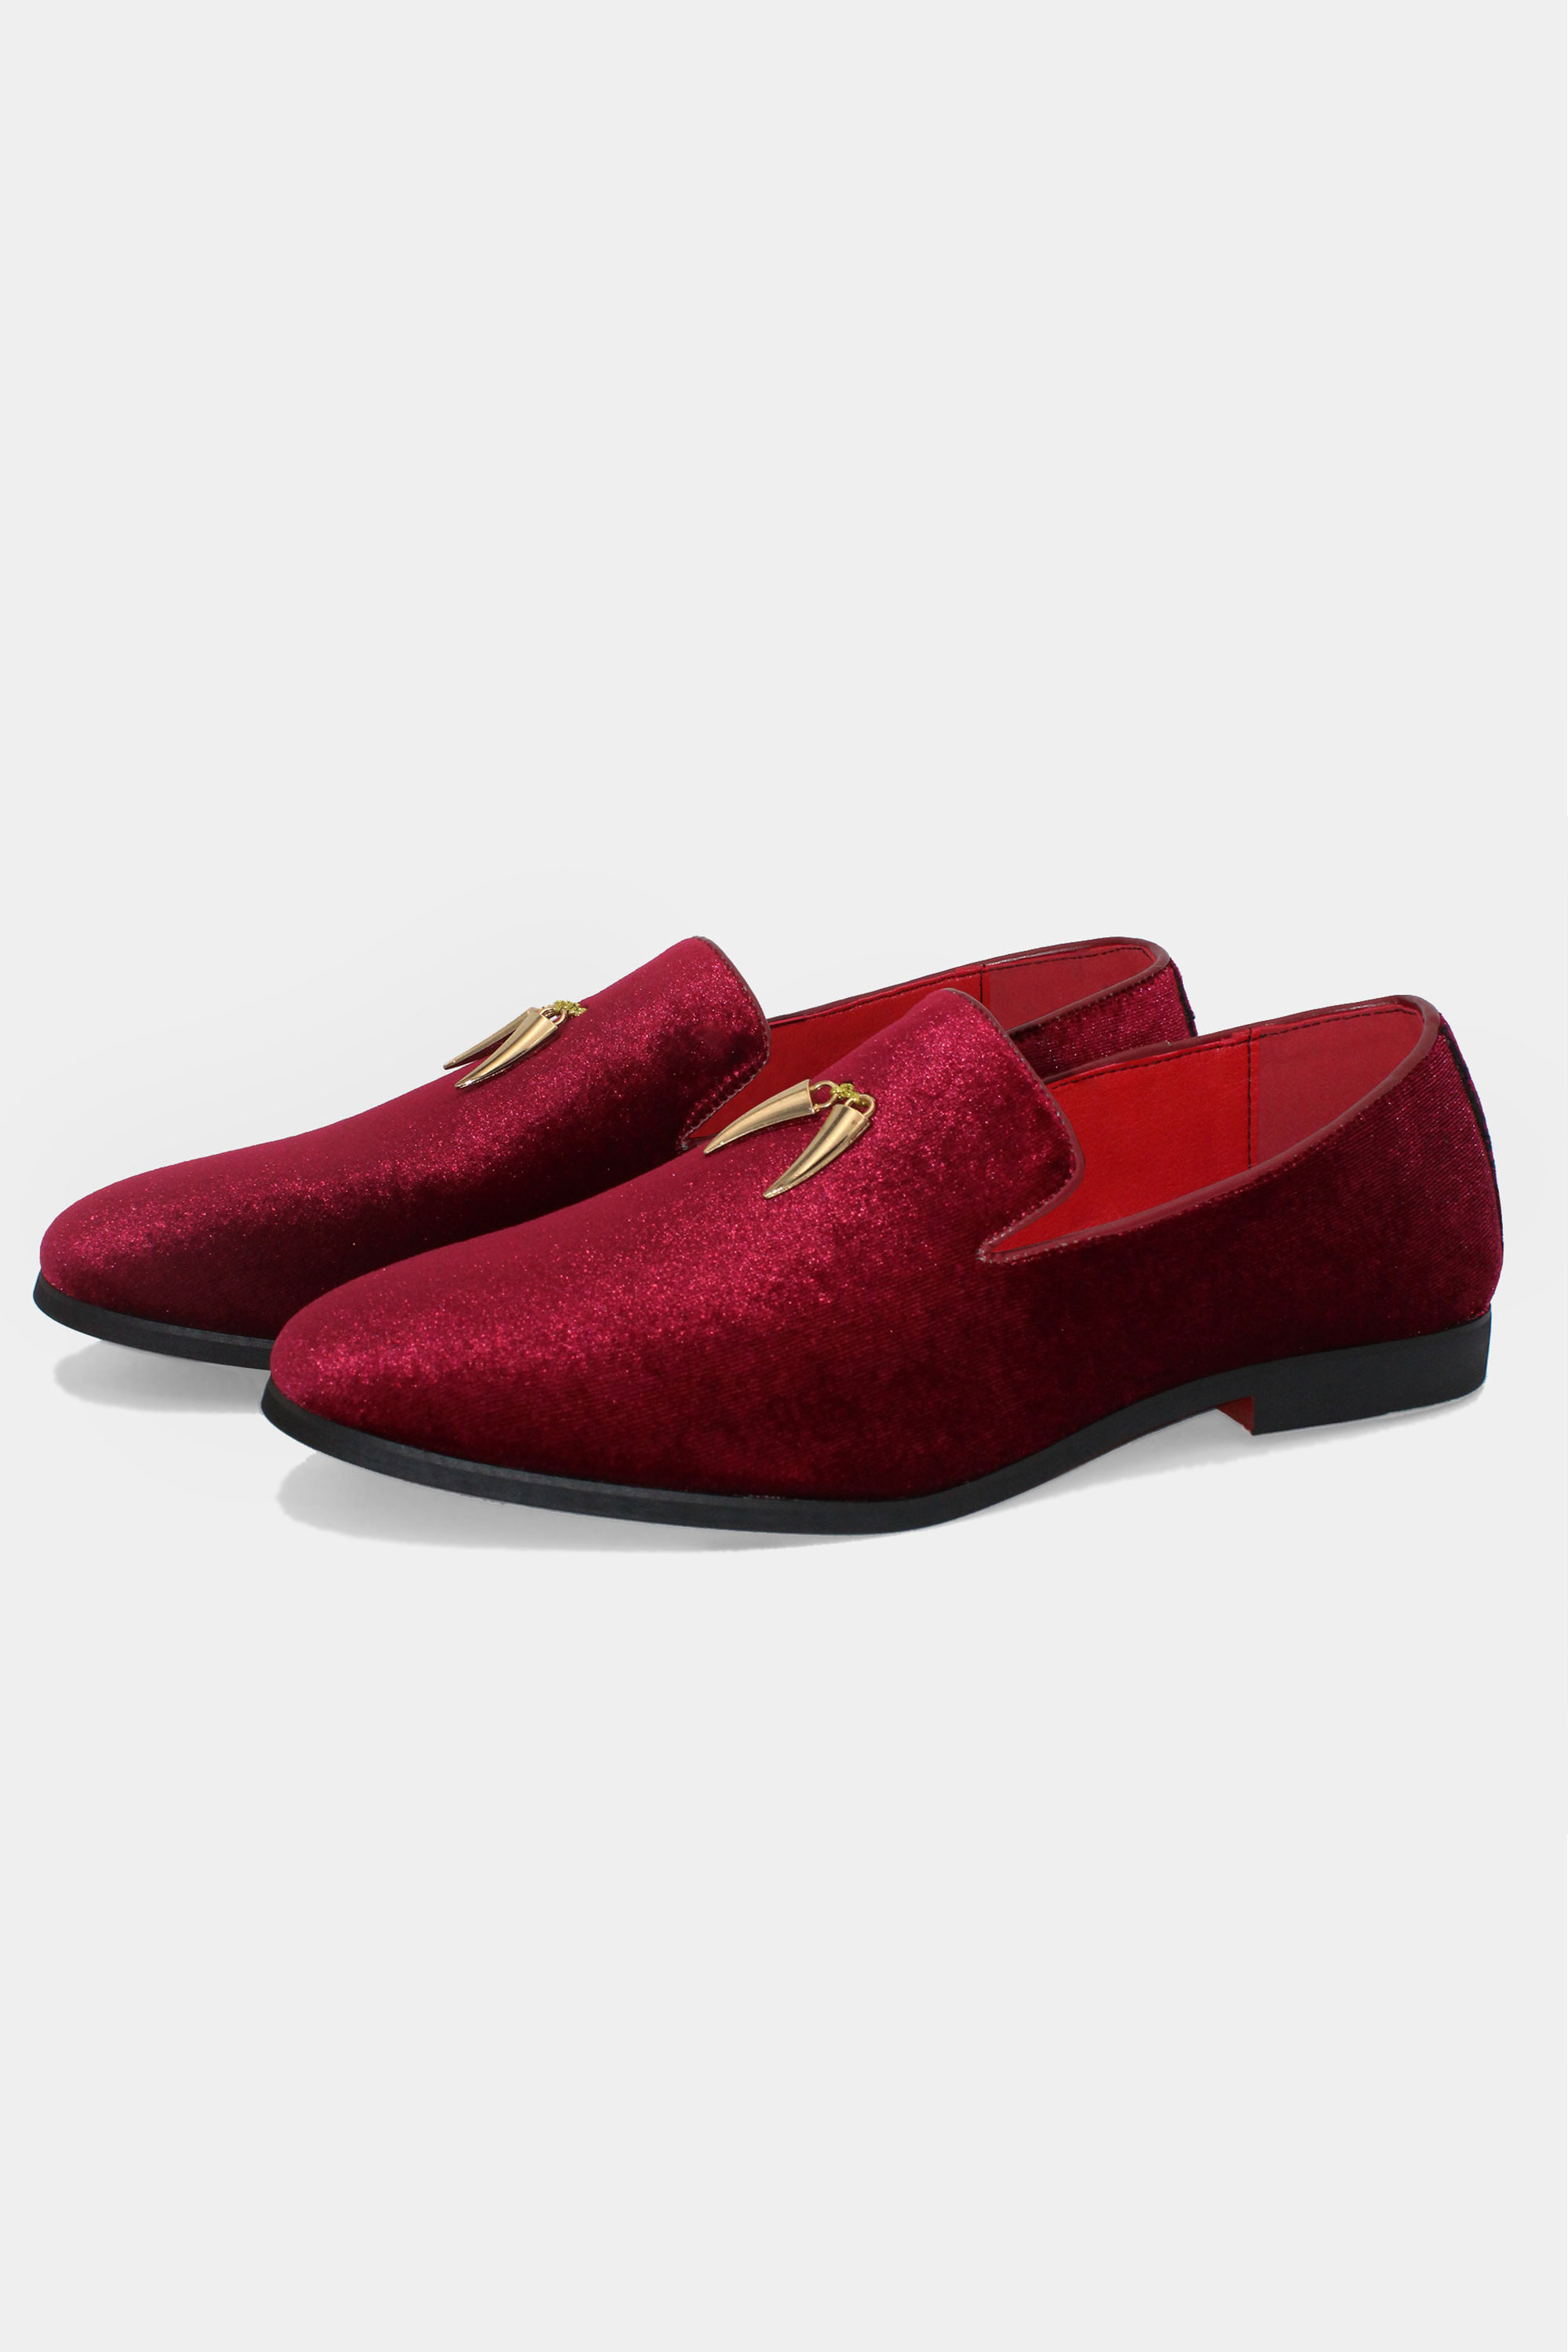 Mens-Burgundy-Velvet-Shoes-Loafers-Groom-Wedding-Shoes-from-Gentlemansguru.com